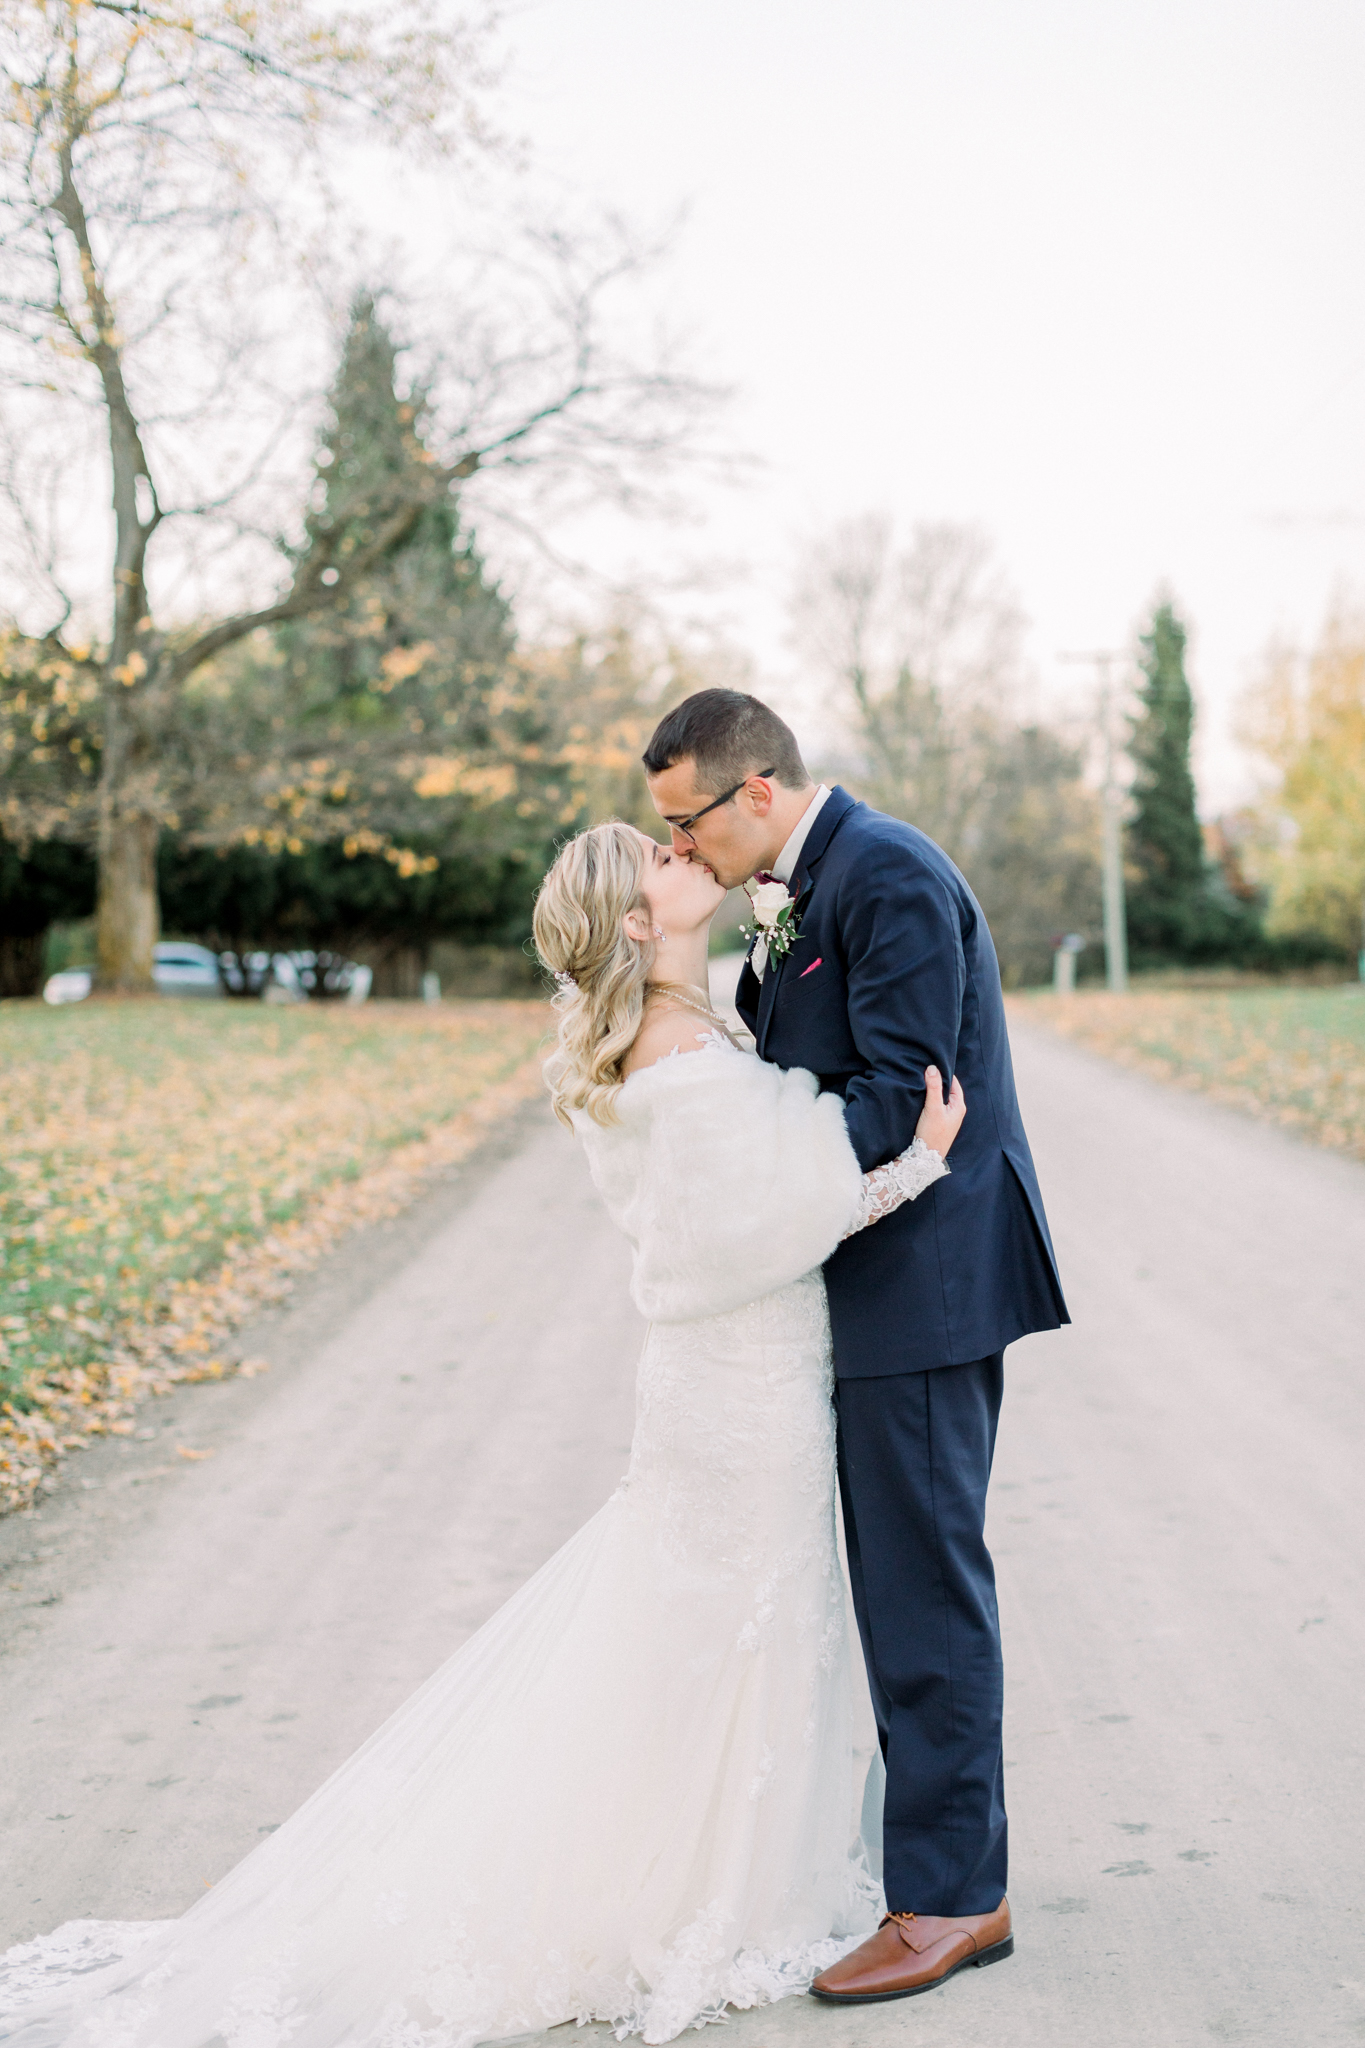 hayley-moore-photography-kylah-josh-manchester-michigan-backyard-fall-wedding